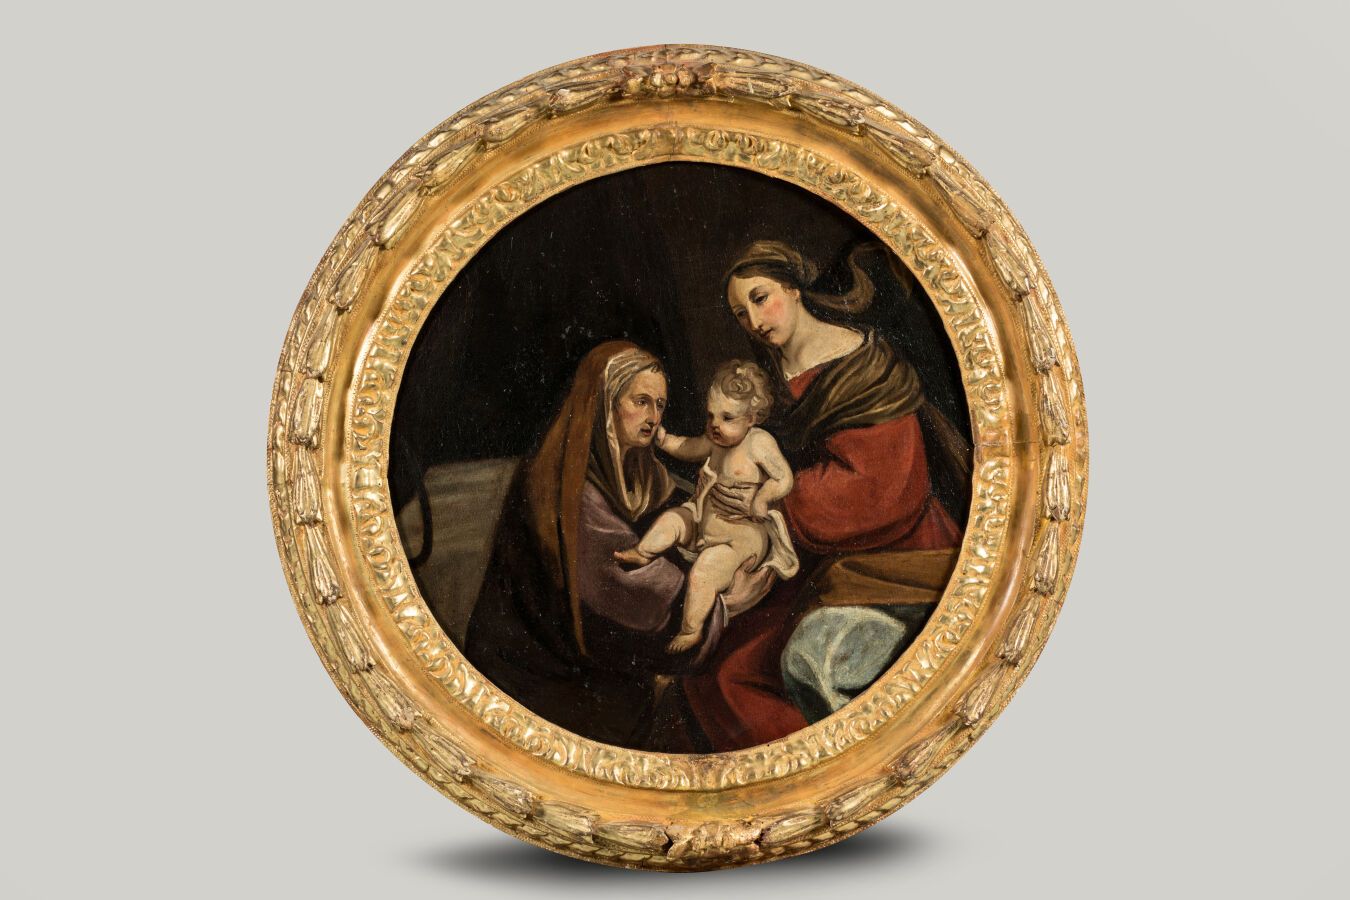 Null 18 世纪的法国画派。"圣安妮和圣母围绕着婴儿耶稣》。布面油画，通多格式。尺寸 59.5 厘米。 
已修复。
木质镀金灰泥画框。